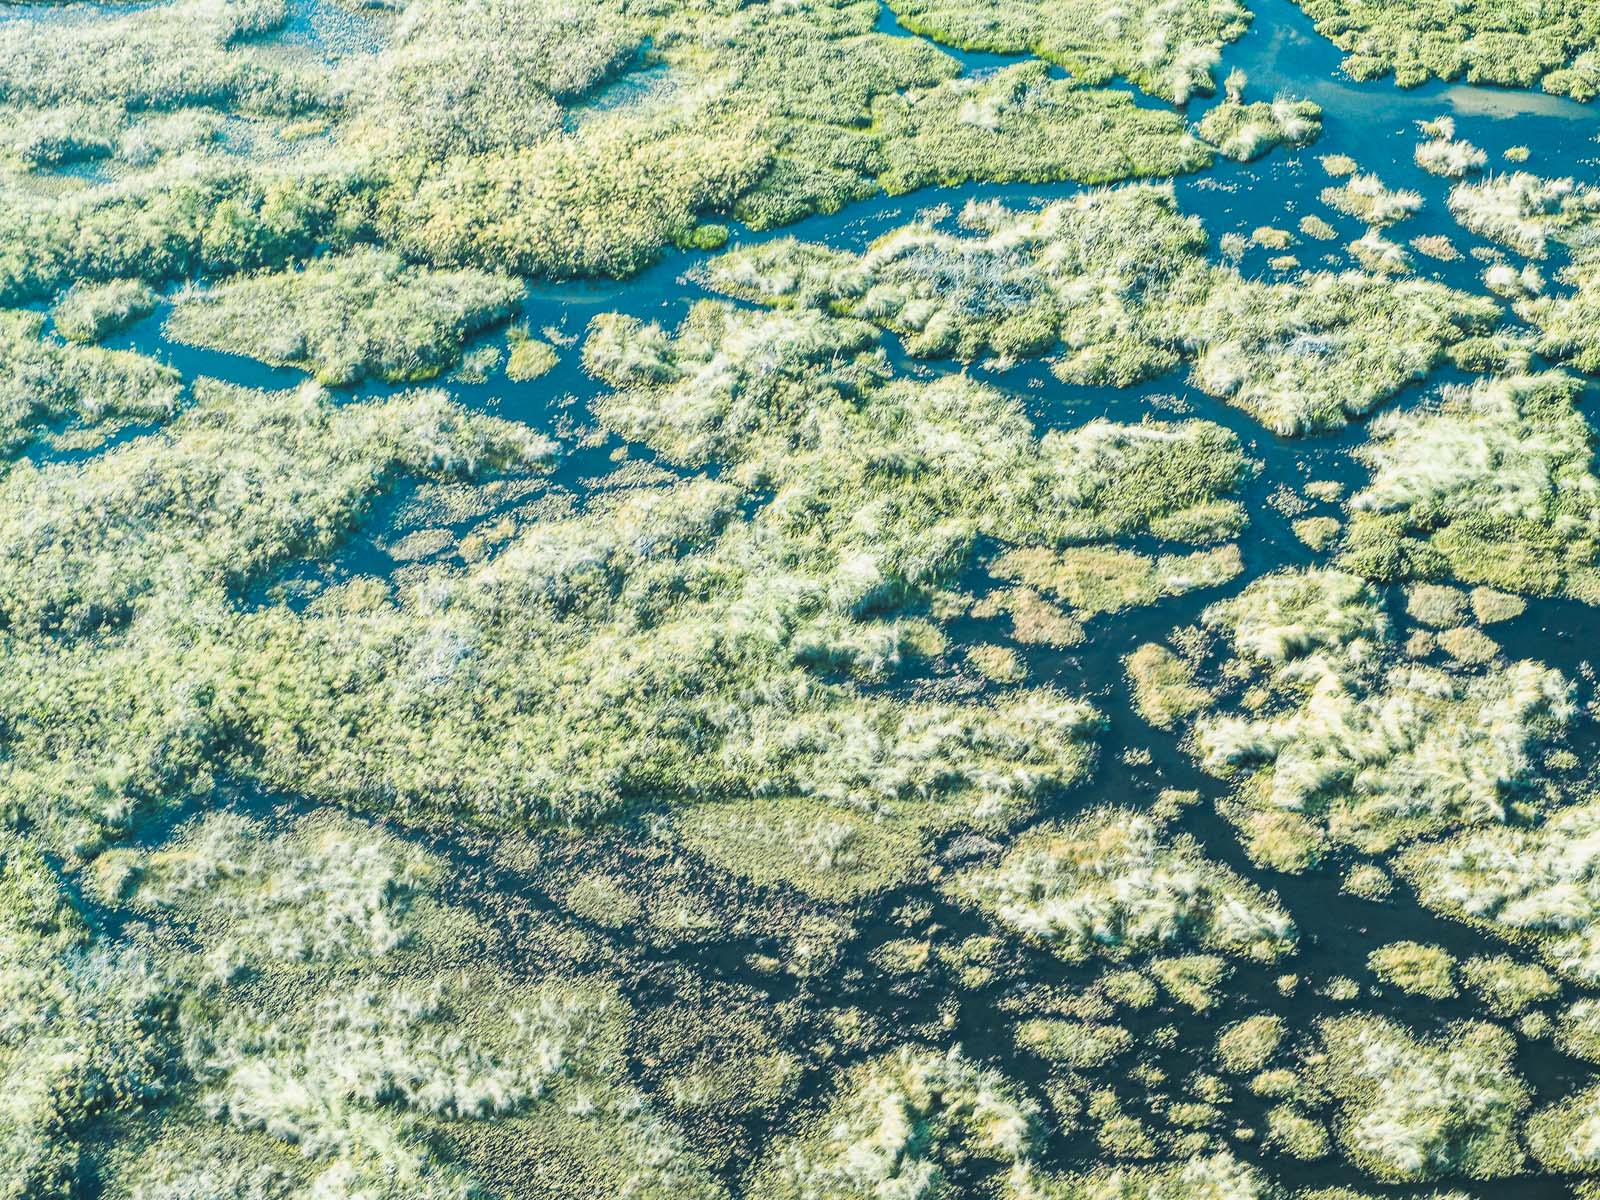 Botswana-Okavango Delta